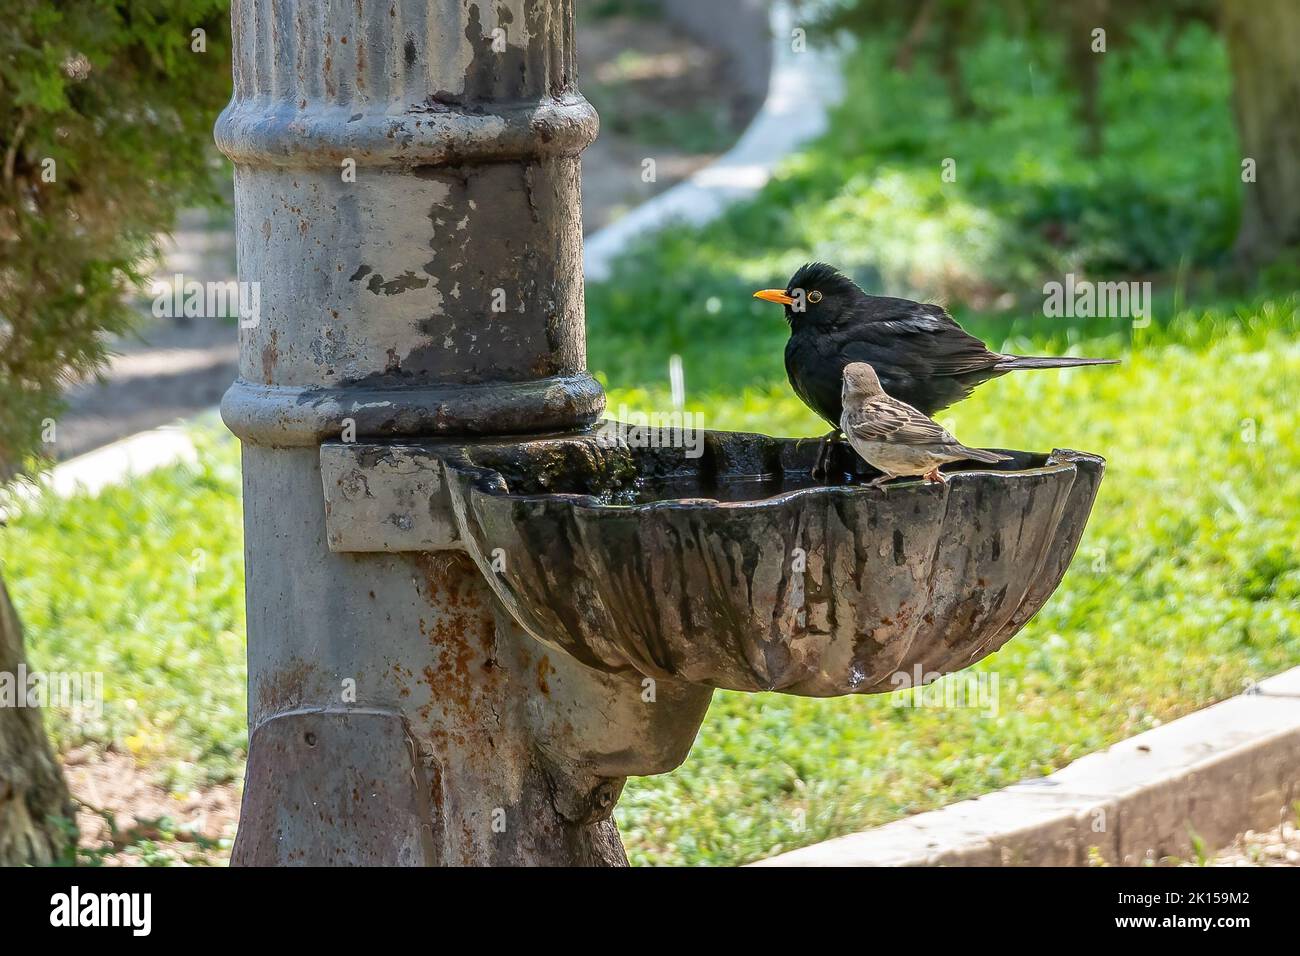 Male blackbird (Turdus merula) bathing and drinking in a public fountain Stock Photo